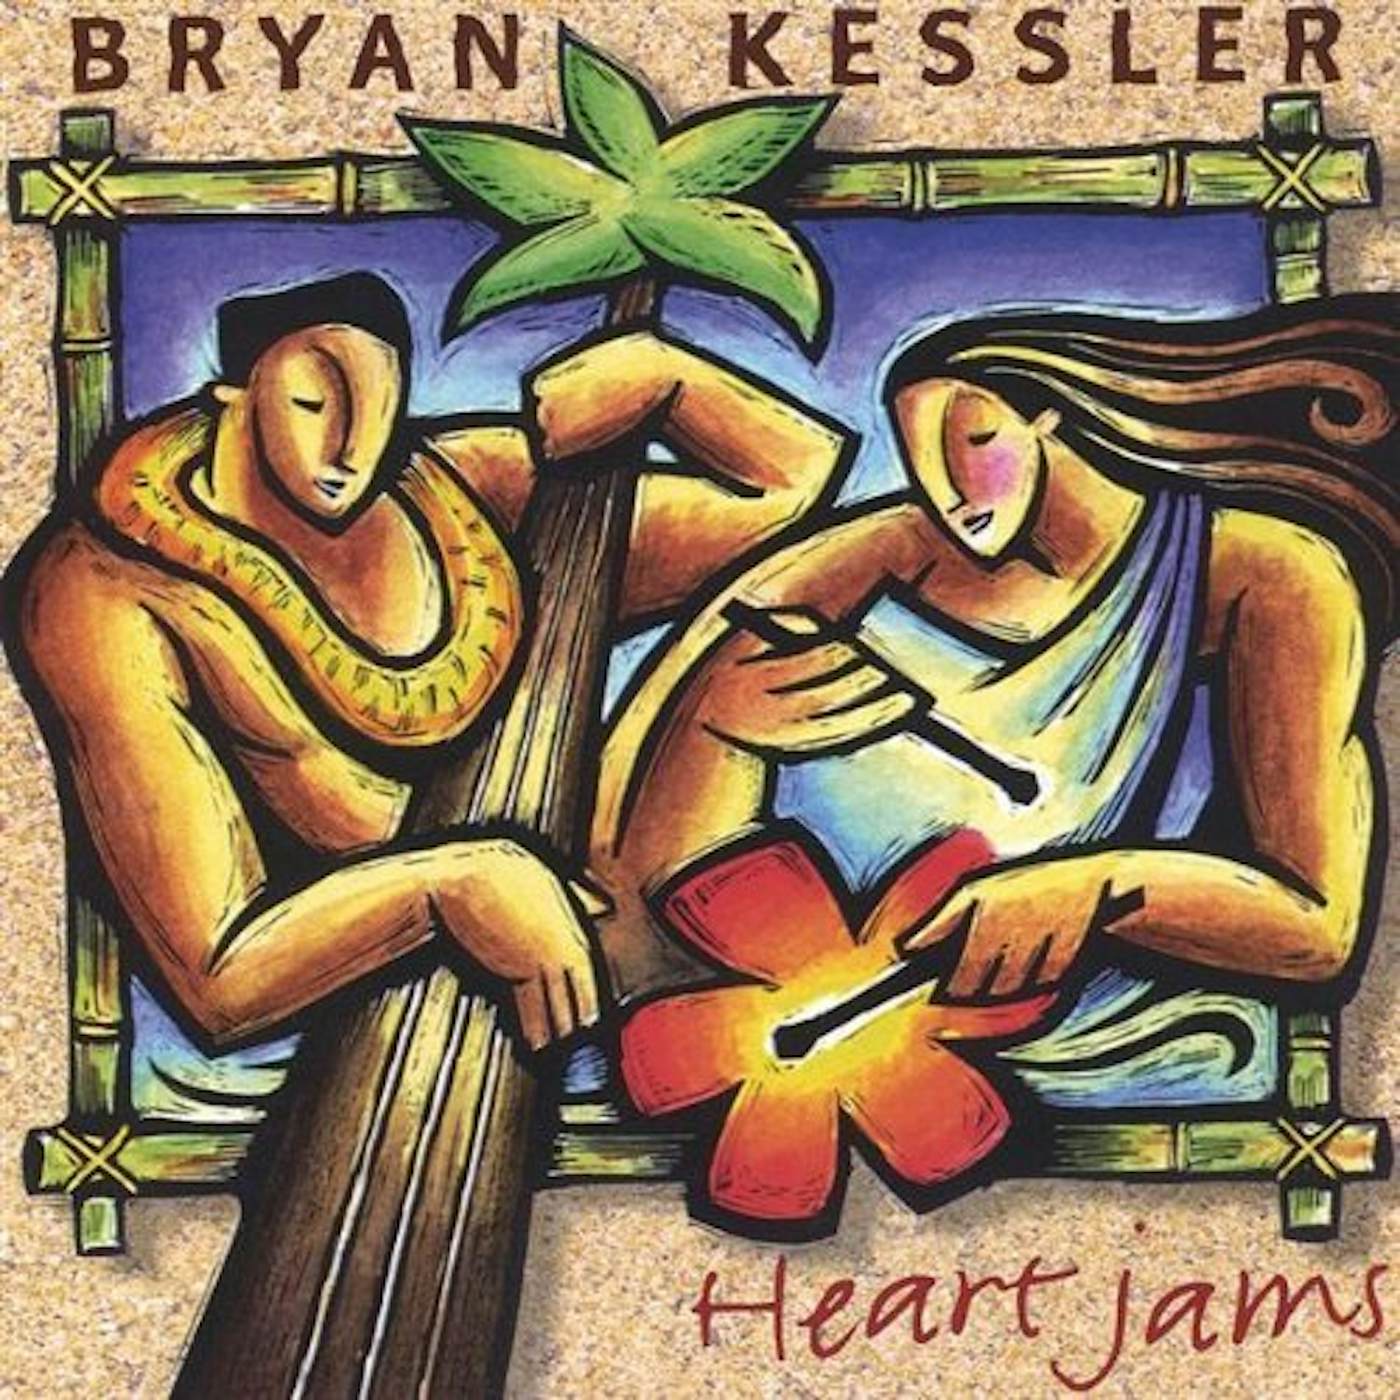 Bryan Kessler HEART JAMS CD